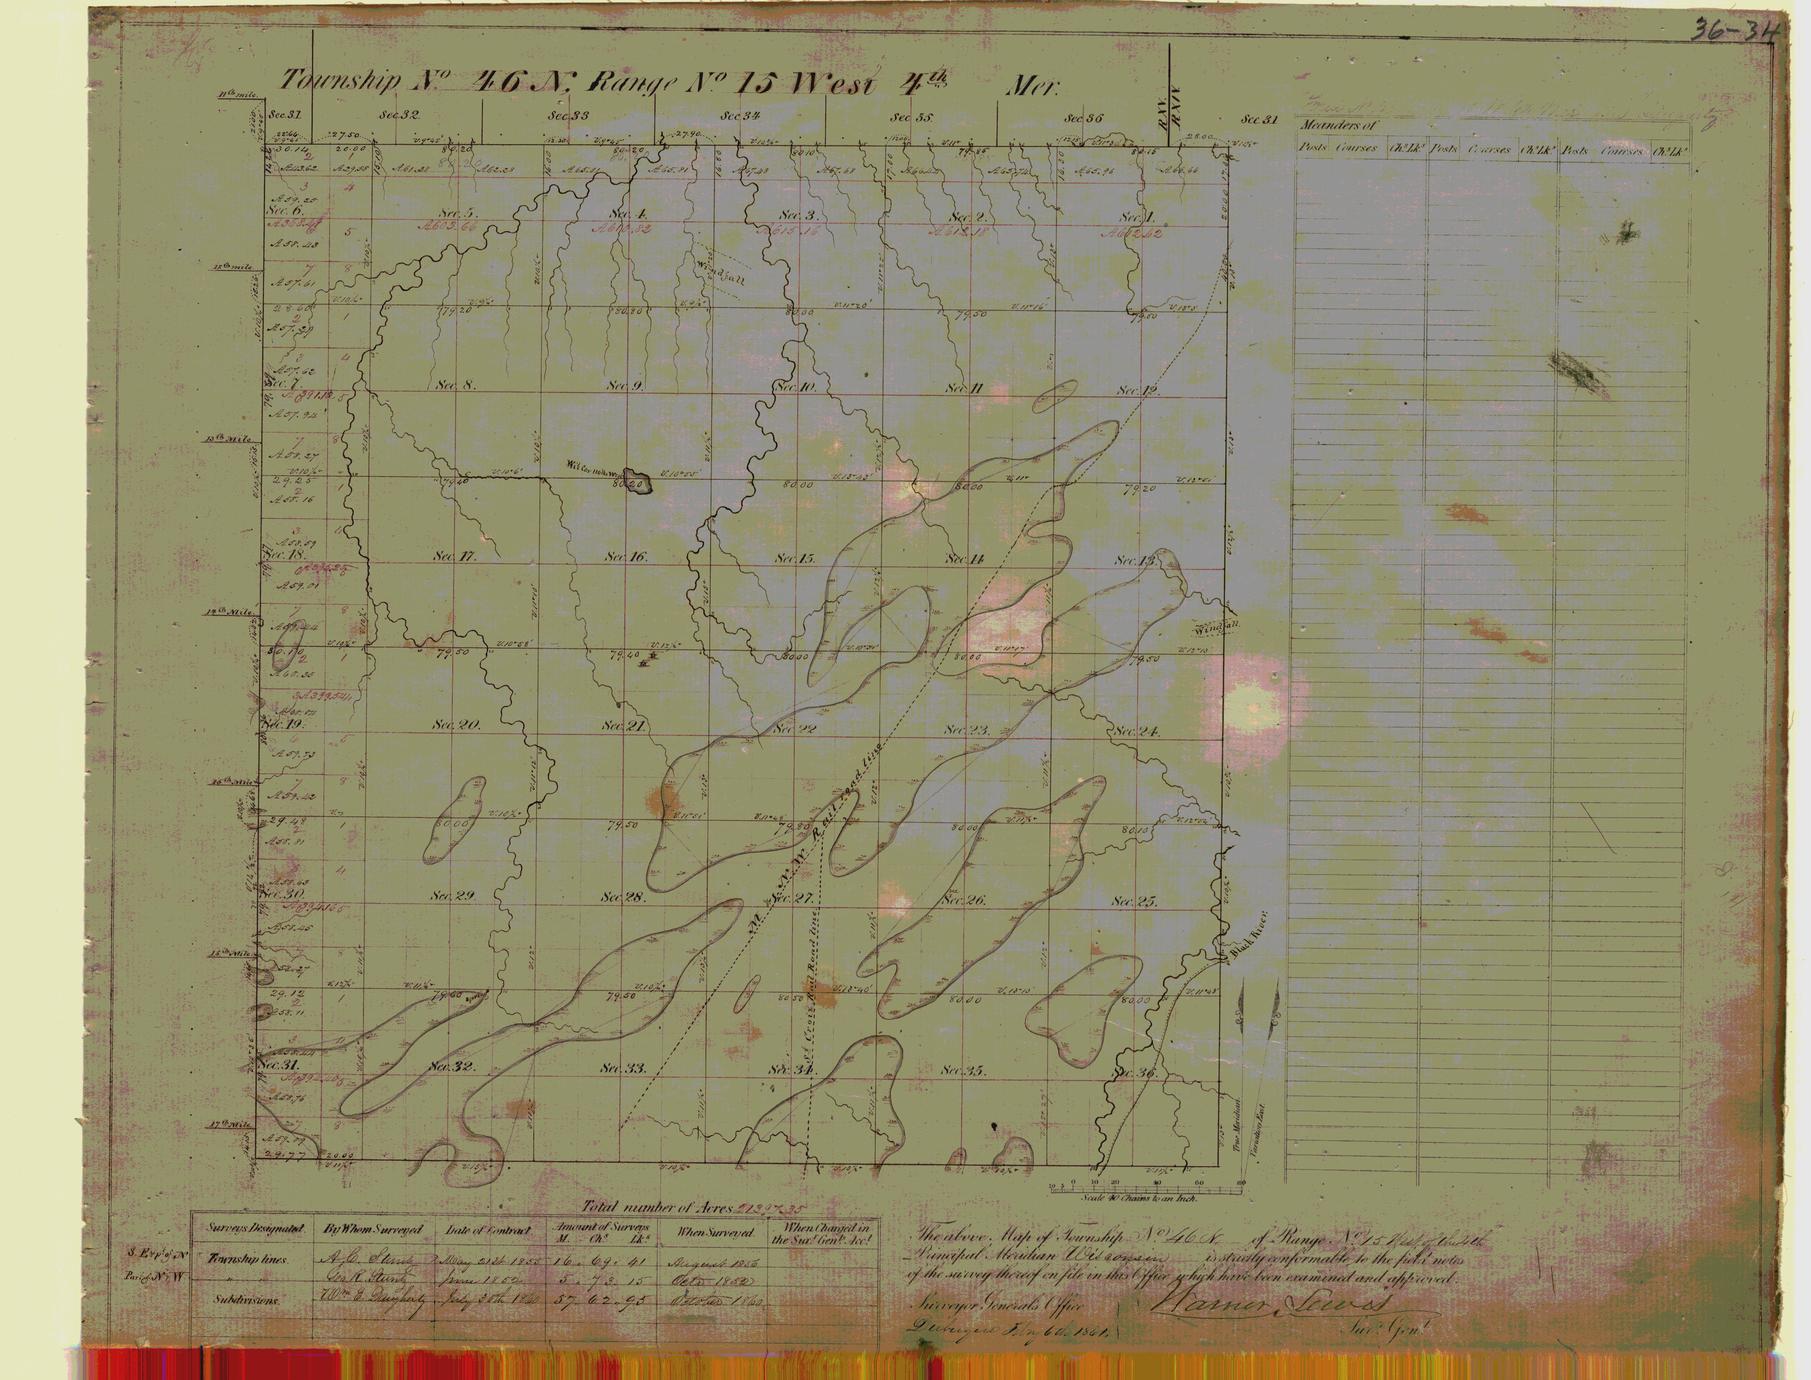 [Public Land Survey System map: Wisconsin Township 46 North, Range 15 West]